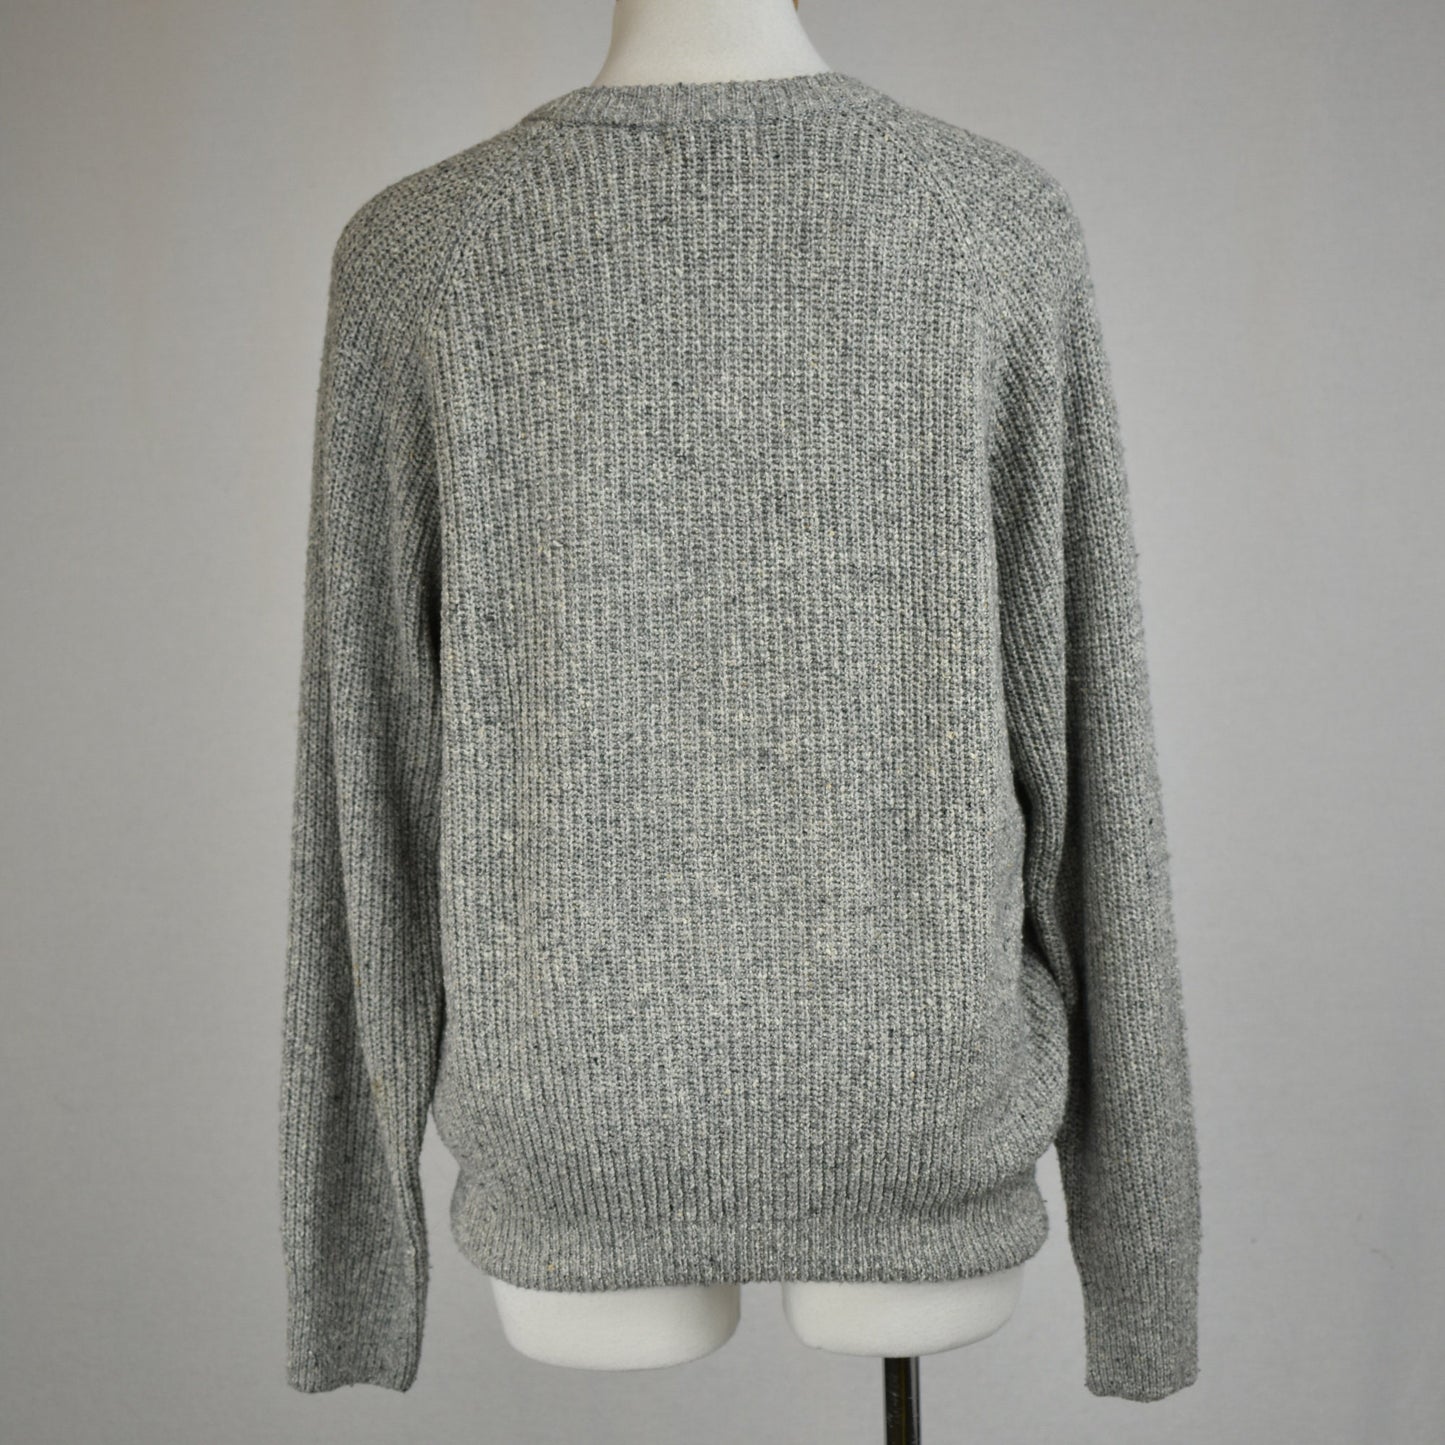 Vintage 80s Heather Grey Silk Melange Sweater - V Neck - Perfect Layering Pullover -